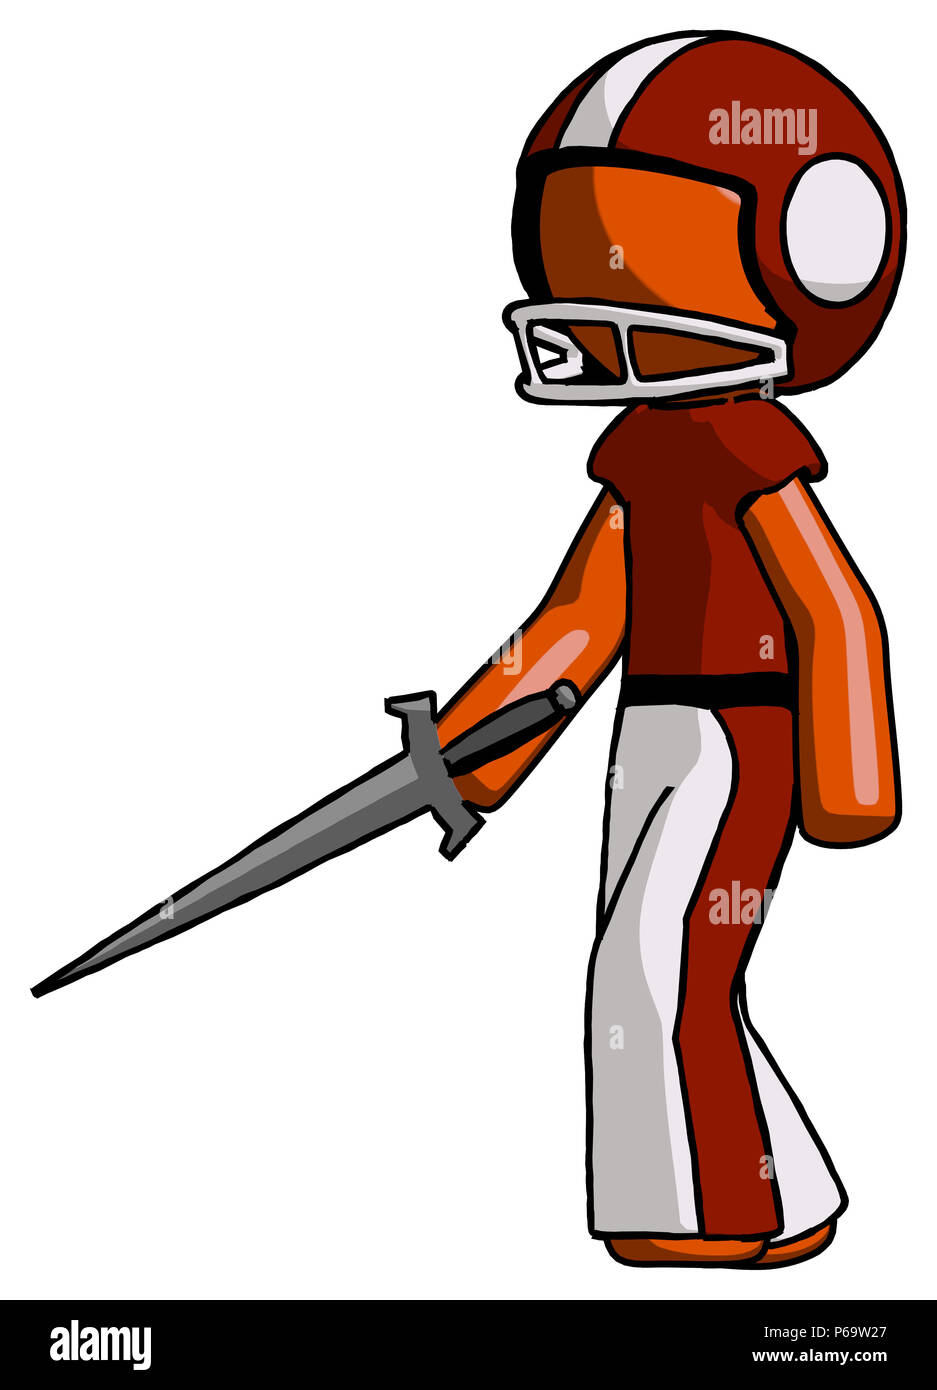 Orange football player man with sword walking confidently. Stock Photo